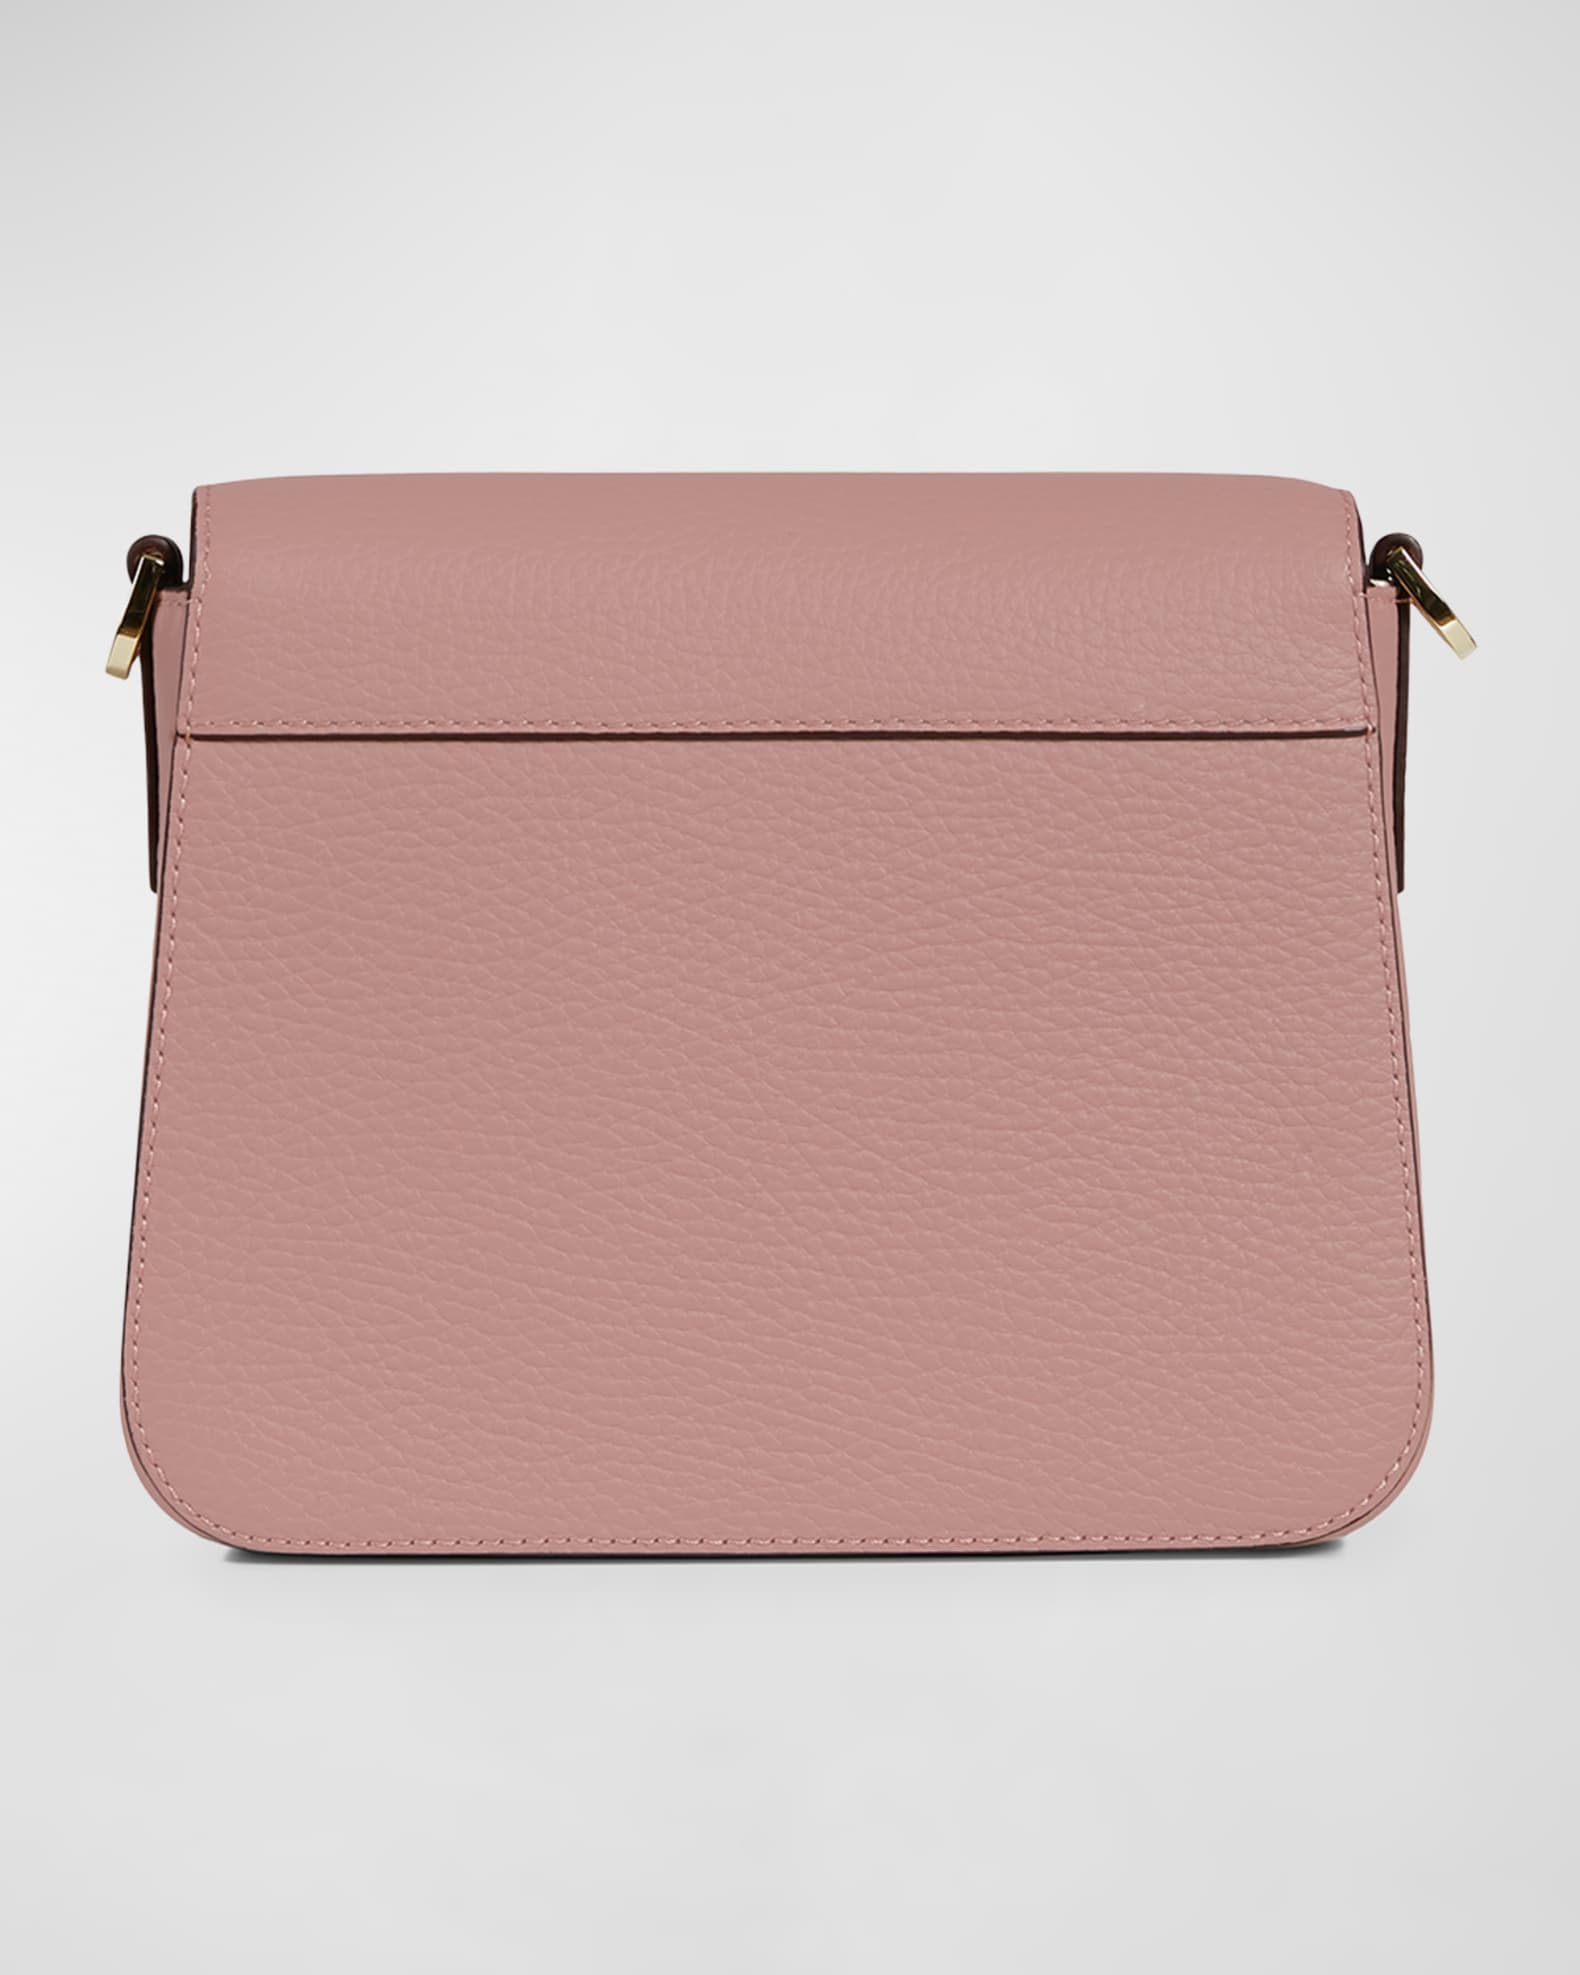 Bedford Flap Crossbody Pink Leather Bag